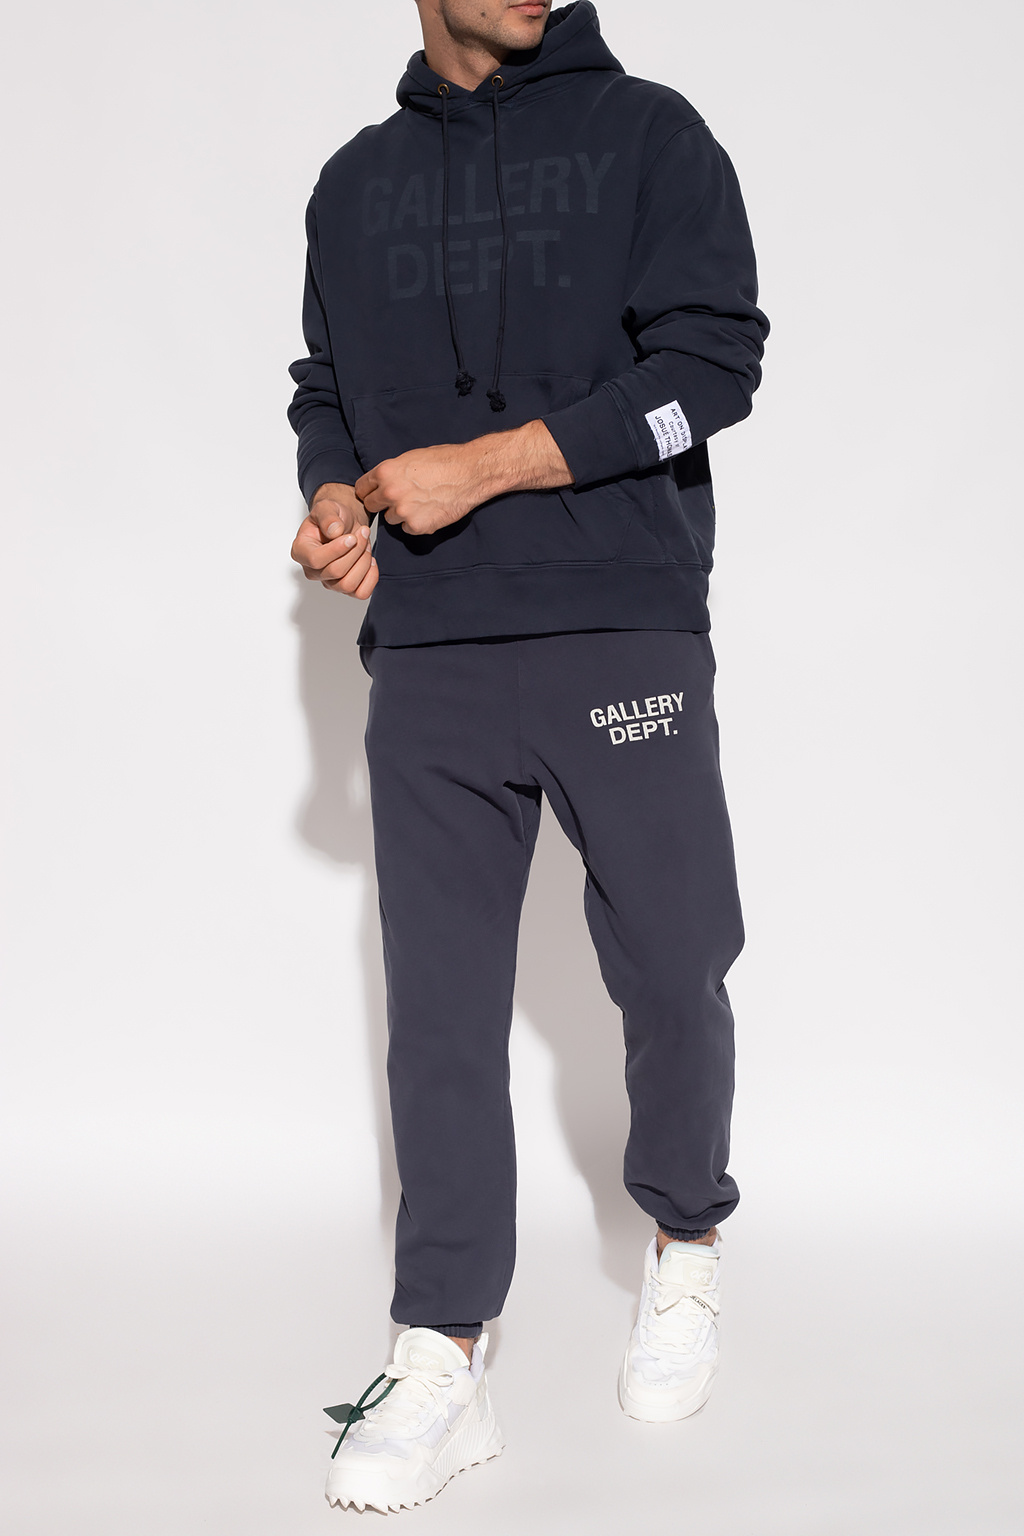 GALLERY DEPT JOGGER'S  Black hoodie men, Pants design, Pants for women